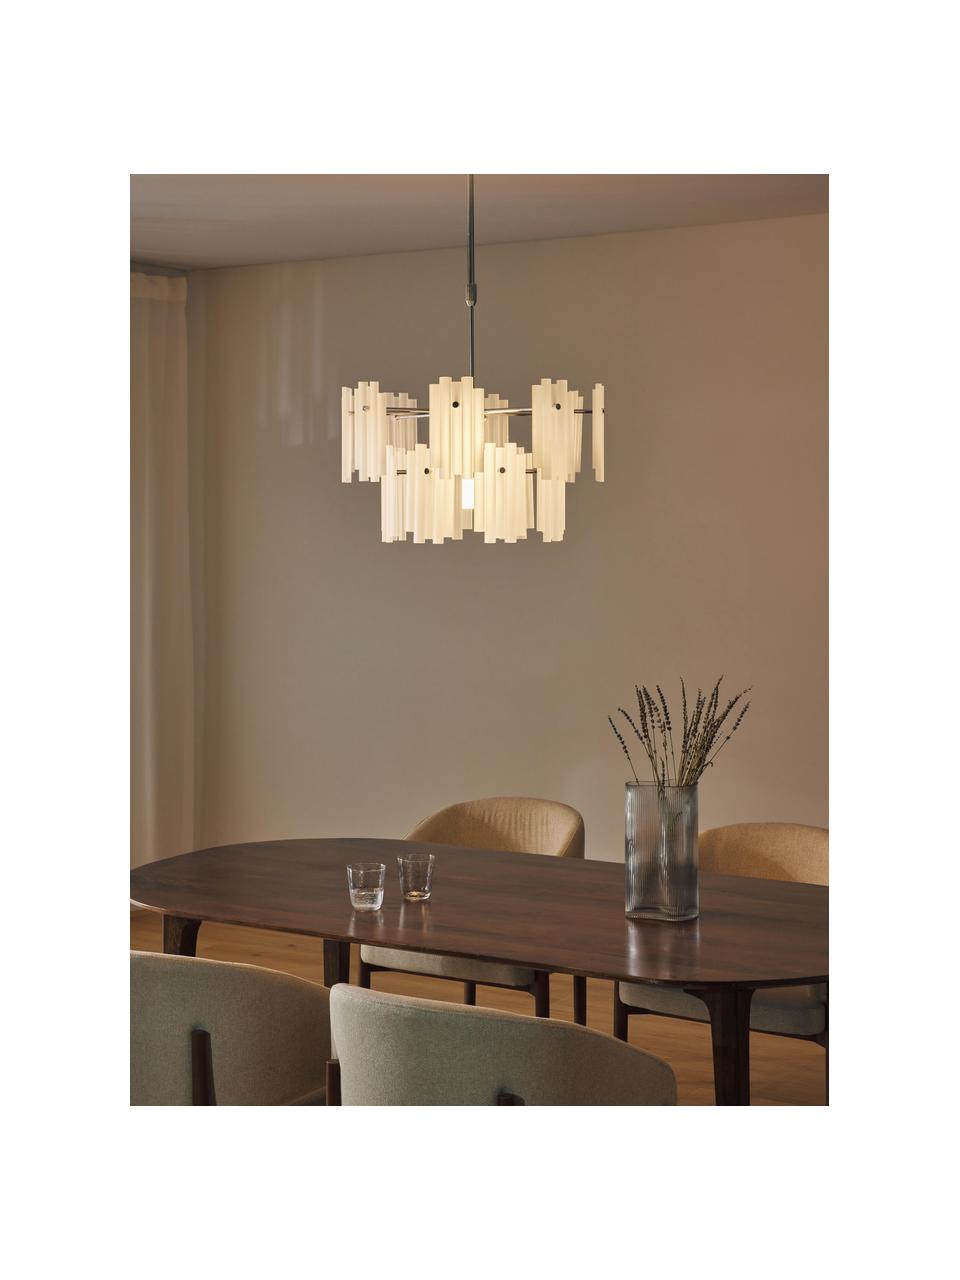 Grote LED hanglamp Alenia, Lampenkap: acrylglas, Wit, chroomkleurig, B 61 x H 98 cm